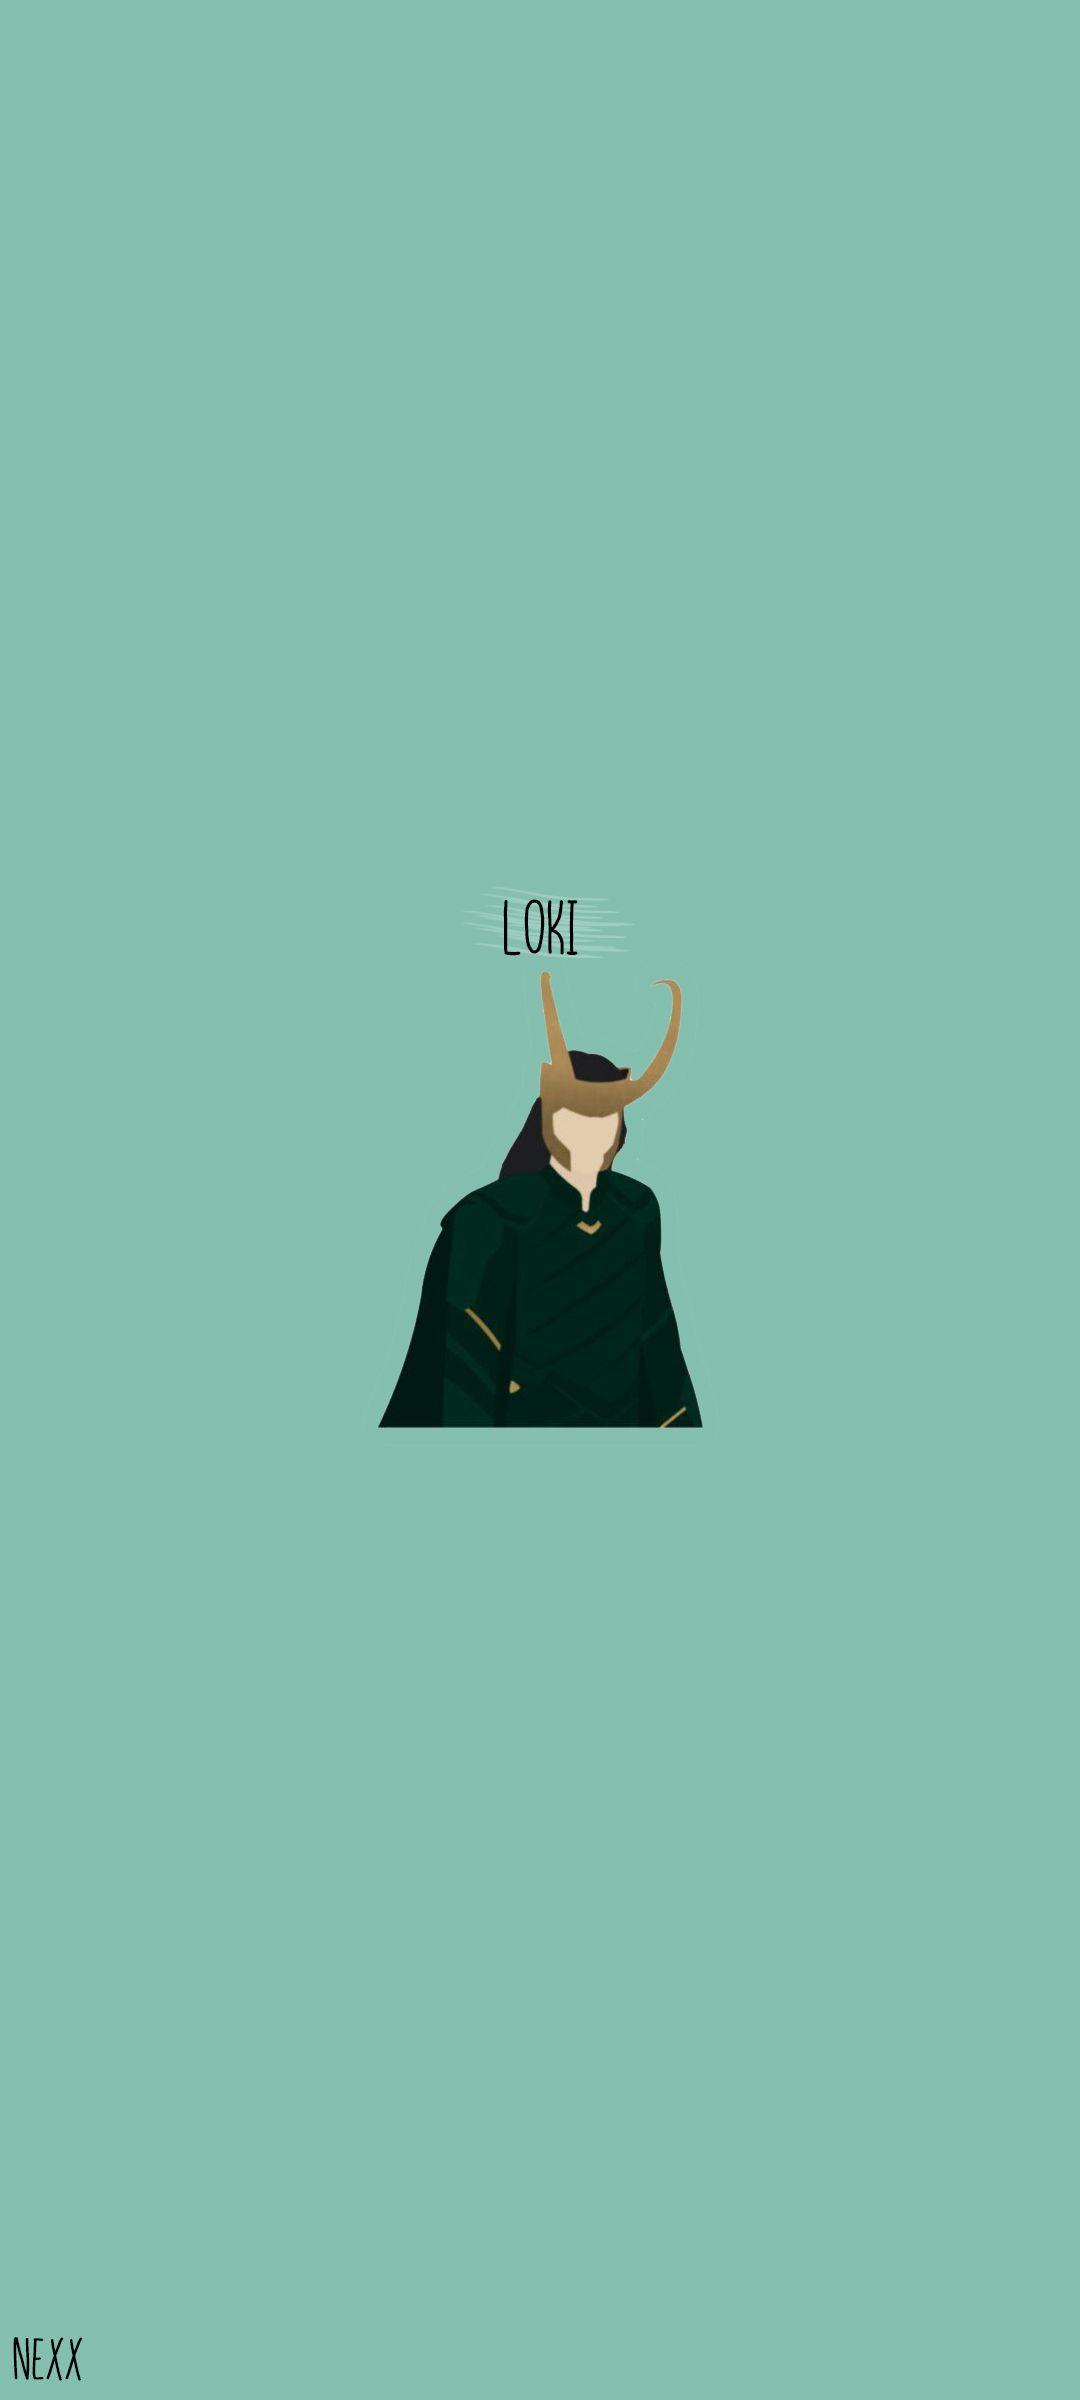 Loki Minimal Poster by YLMZDESIGN on DeviantArt